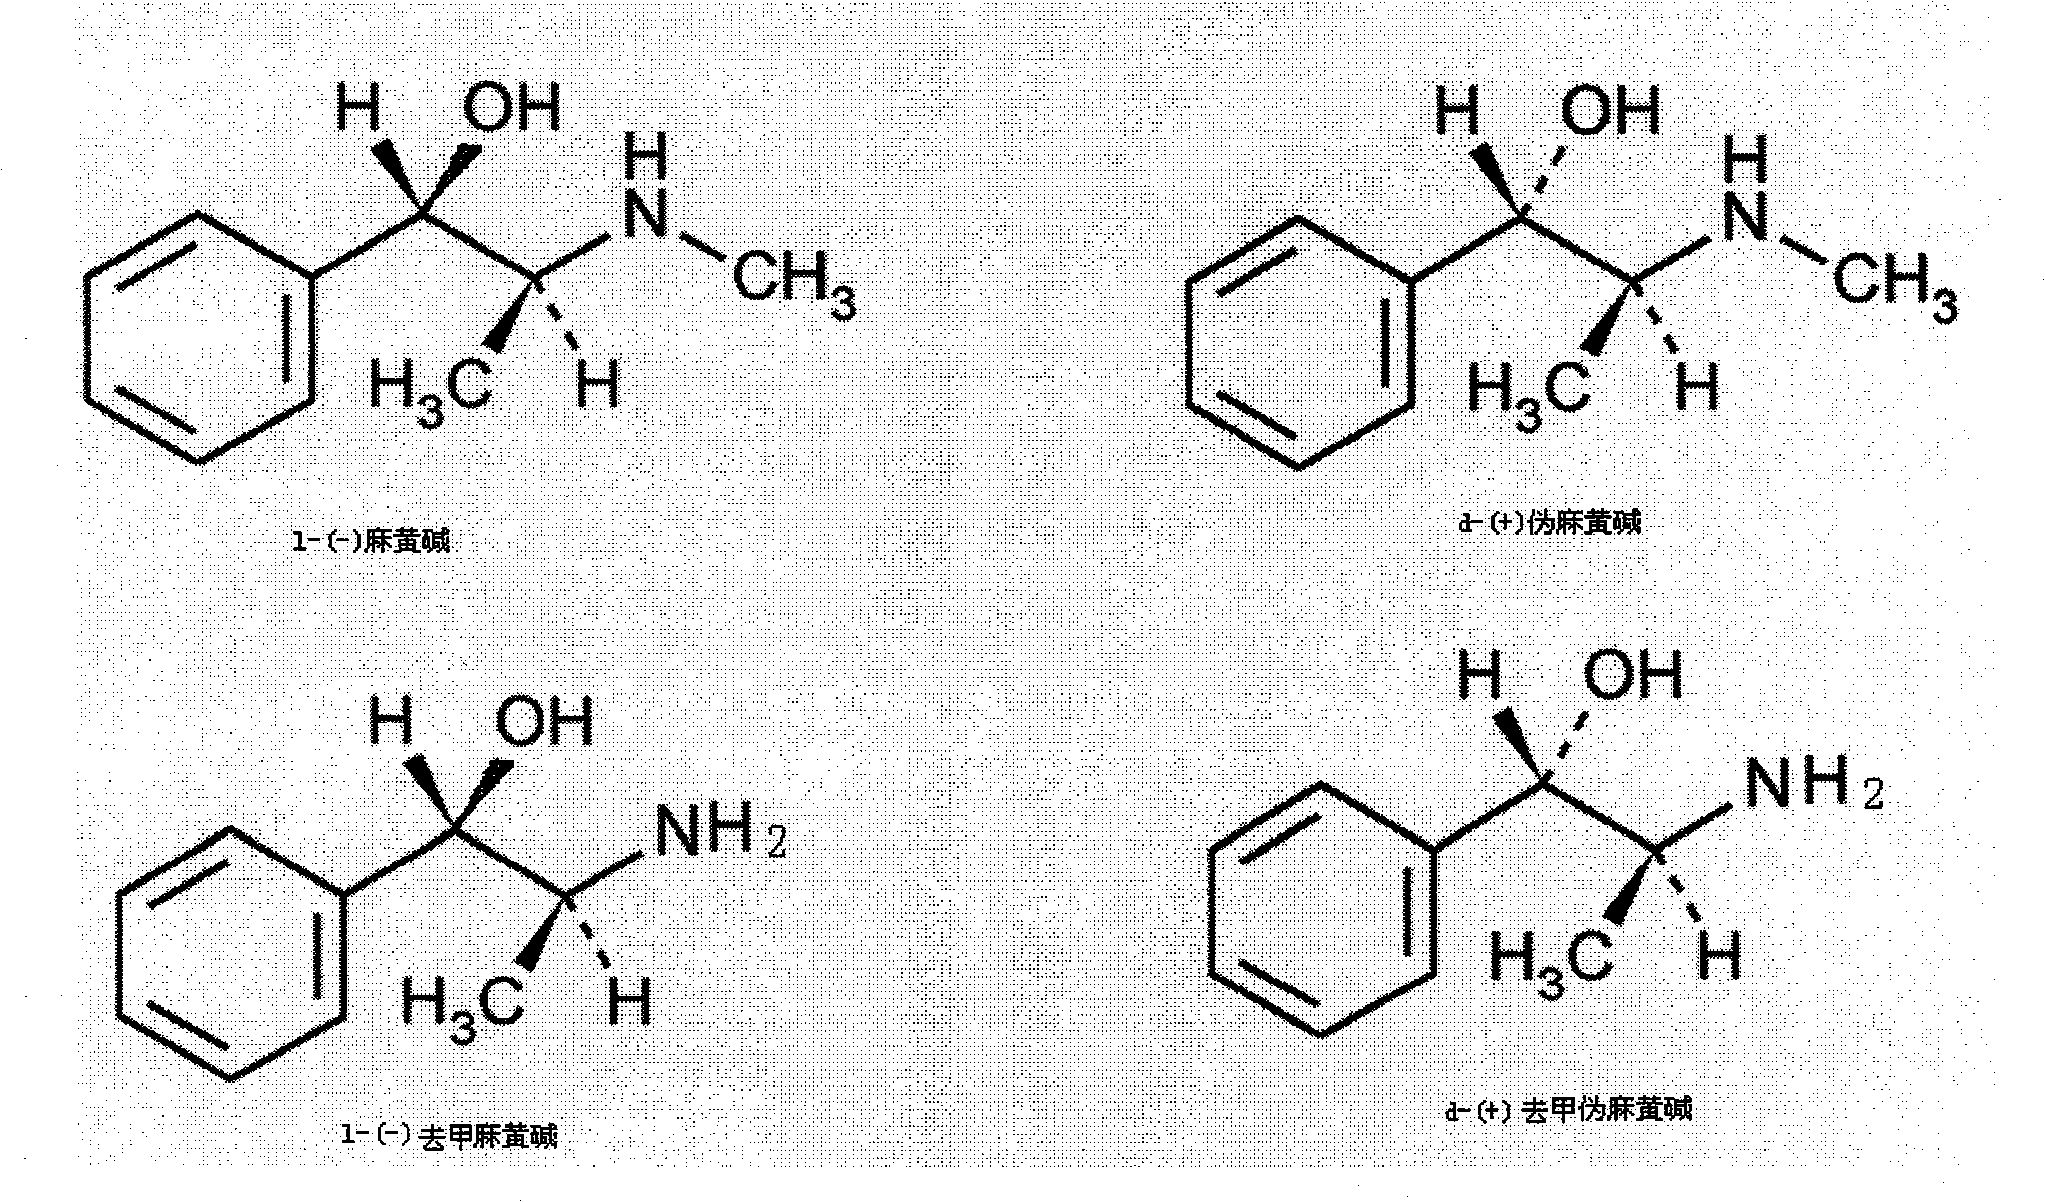 Preparation method of L-(-)-ephedrine chloride and d-(+)-pseudoephedrine hydrochloride